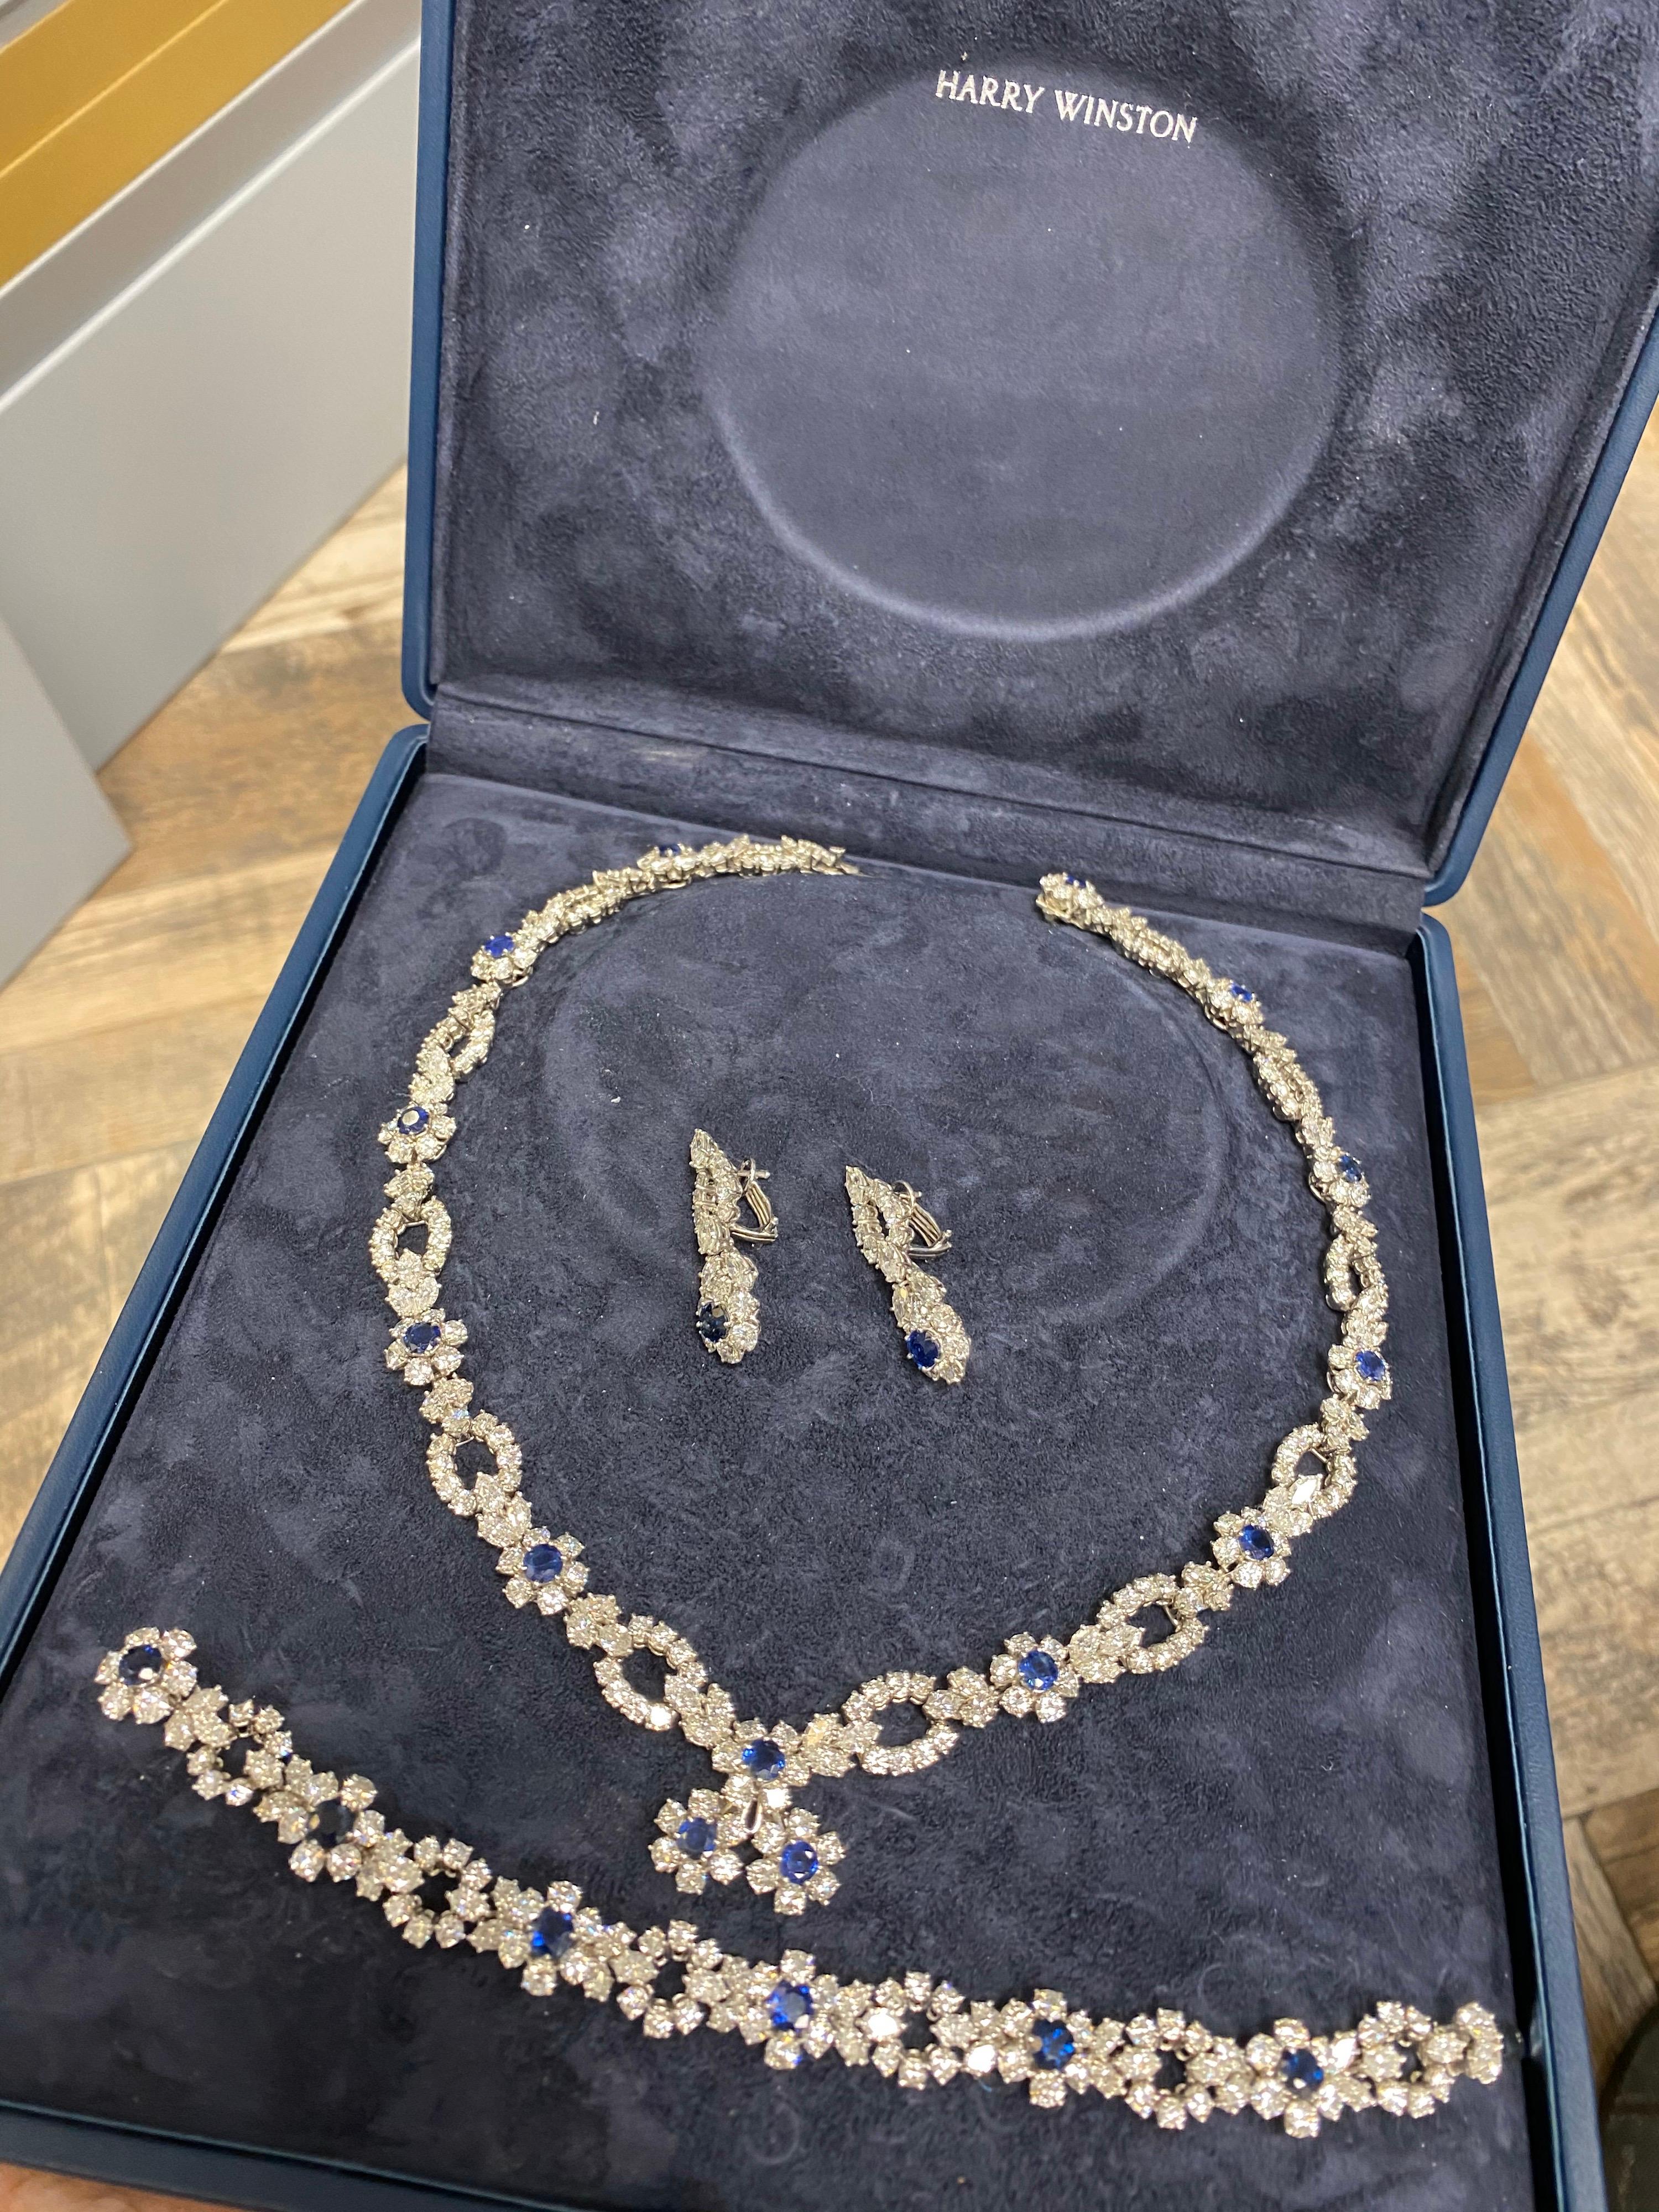 harry winston sapphire necklace